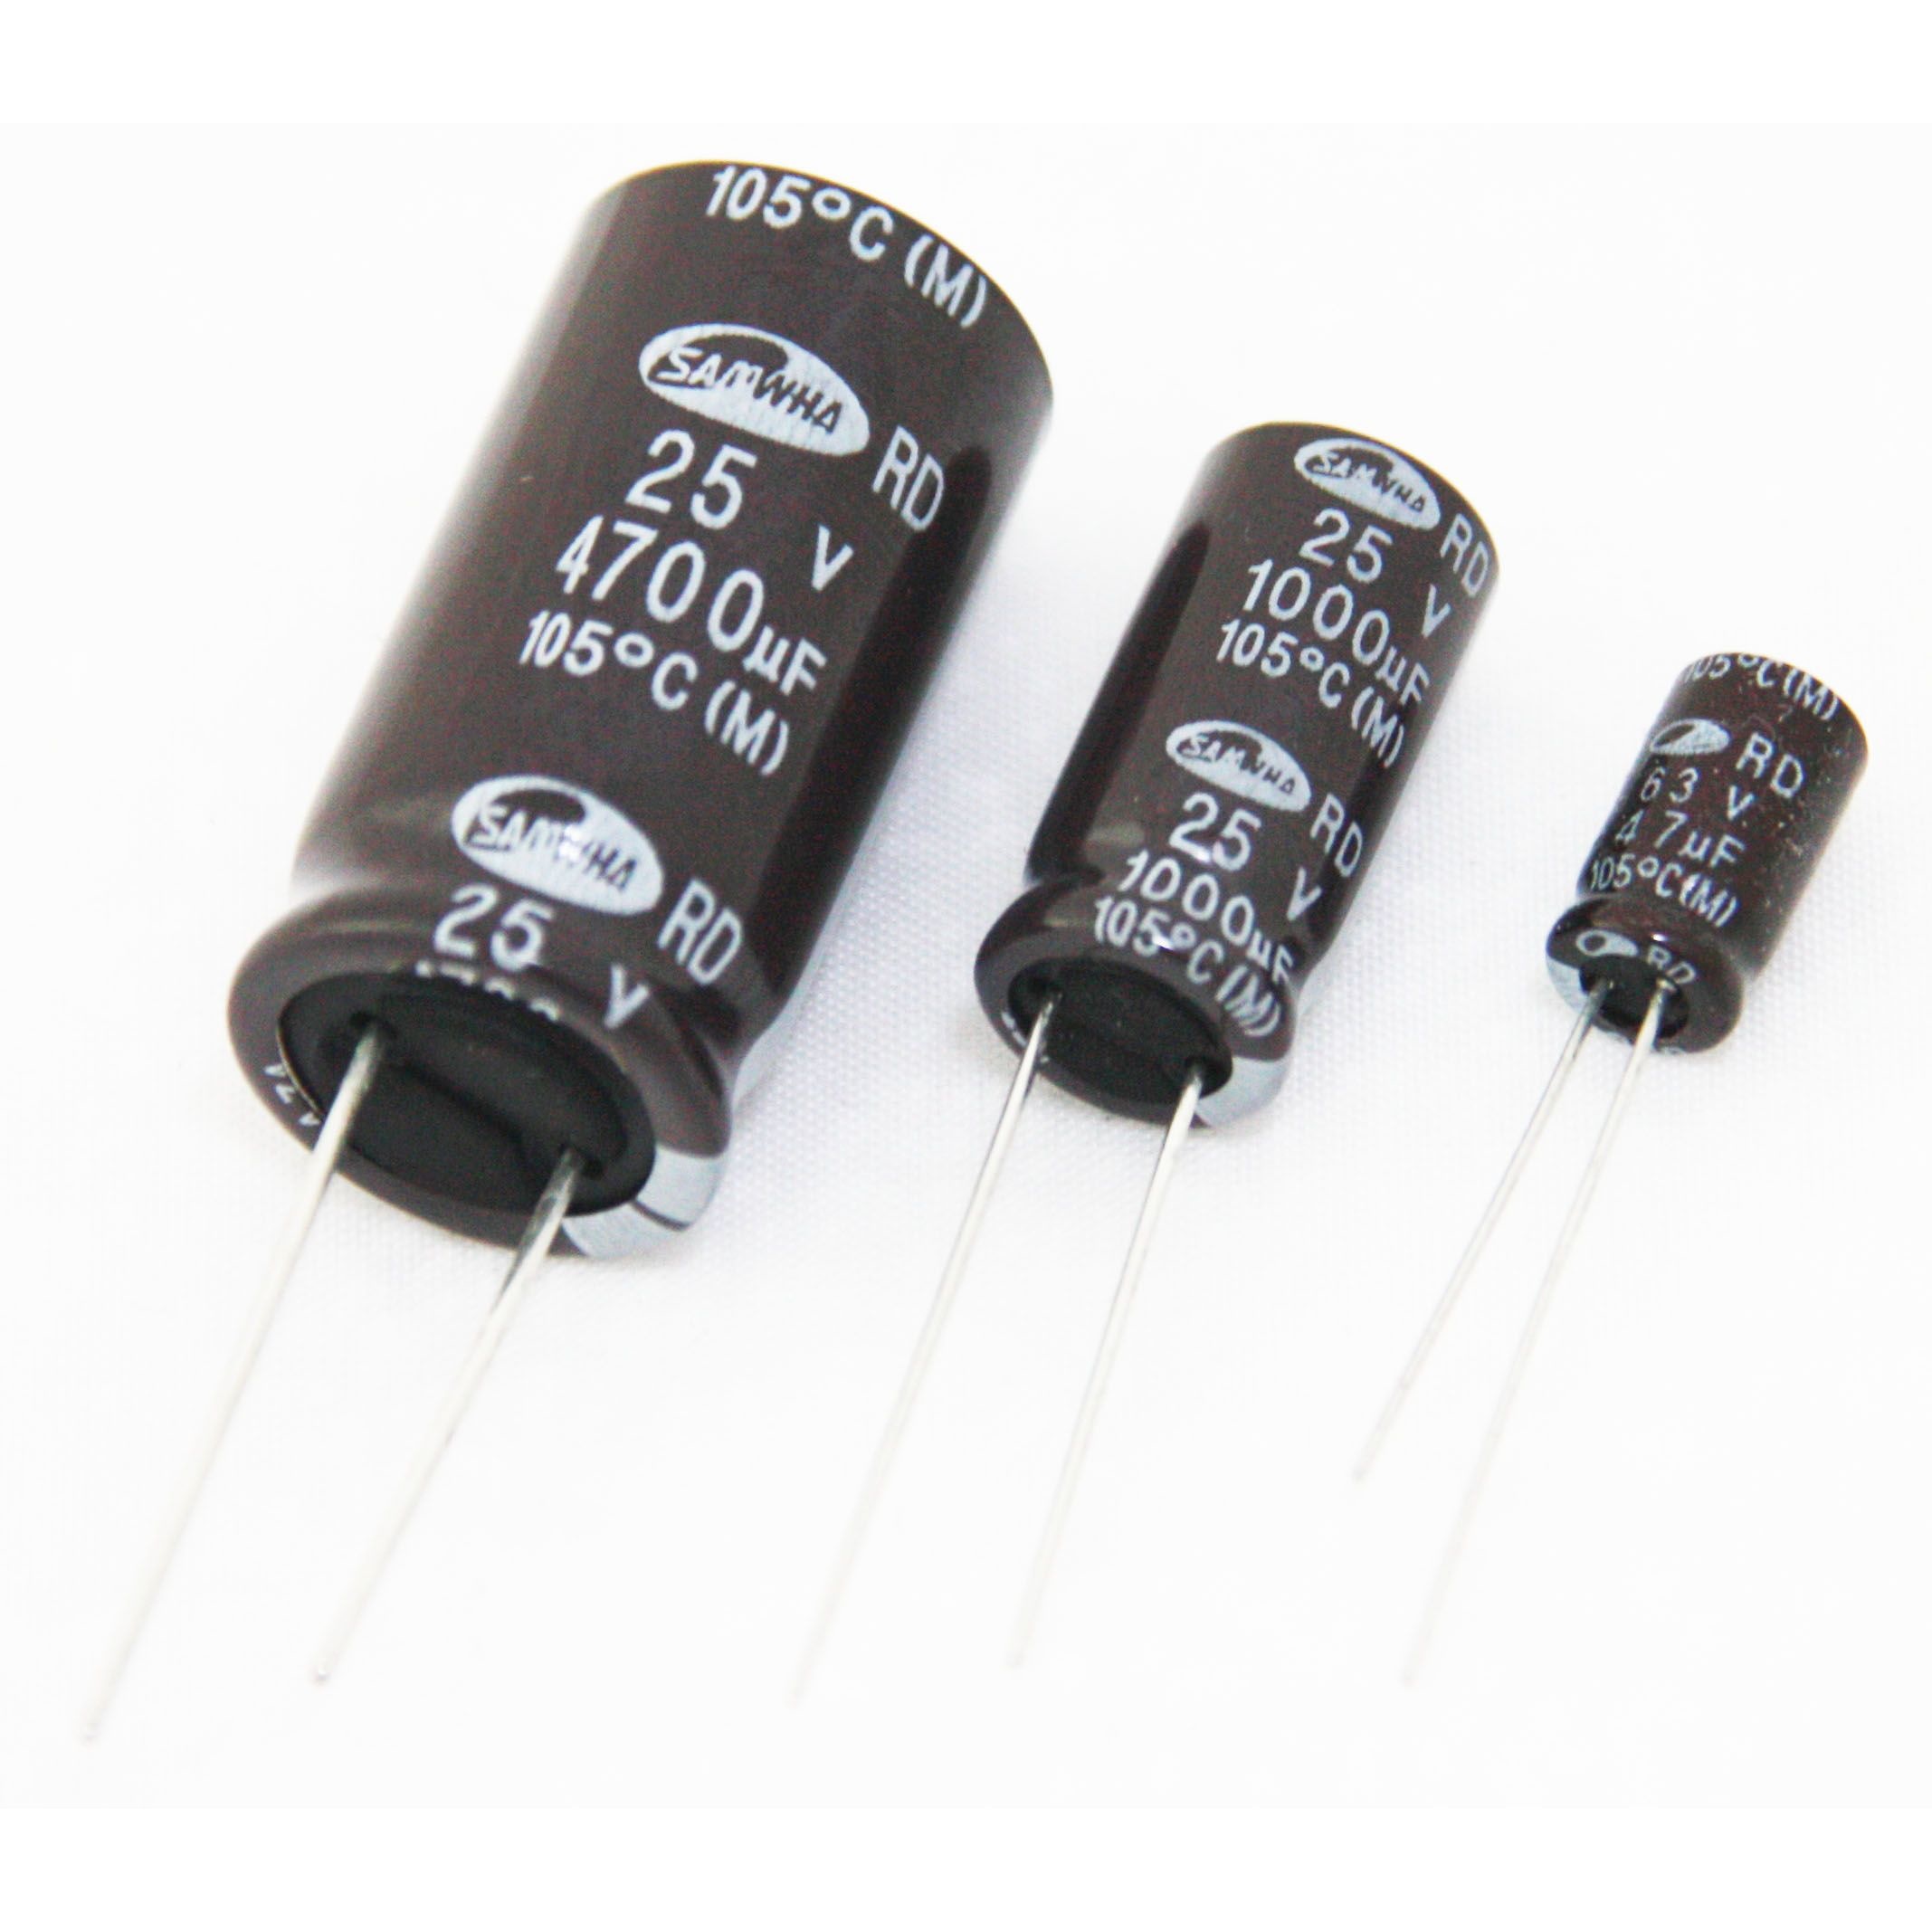 Electrolytic capacitor 105° 2200uF-25V